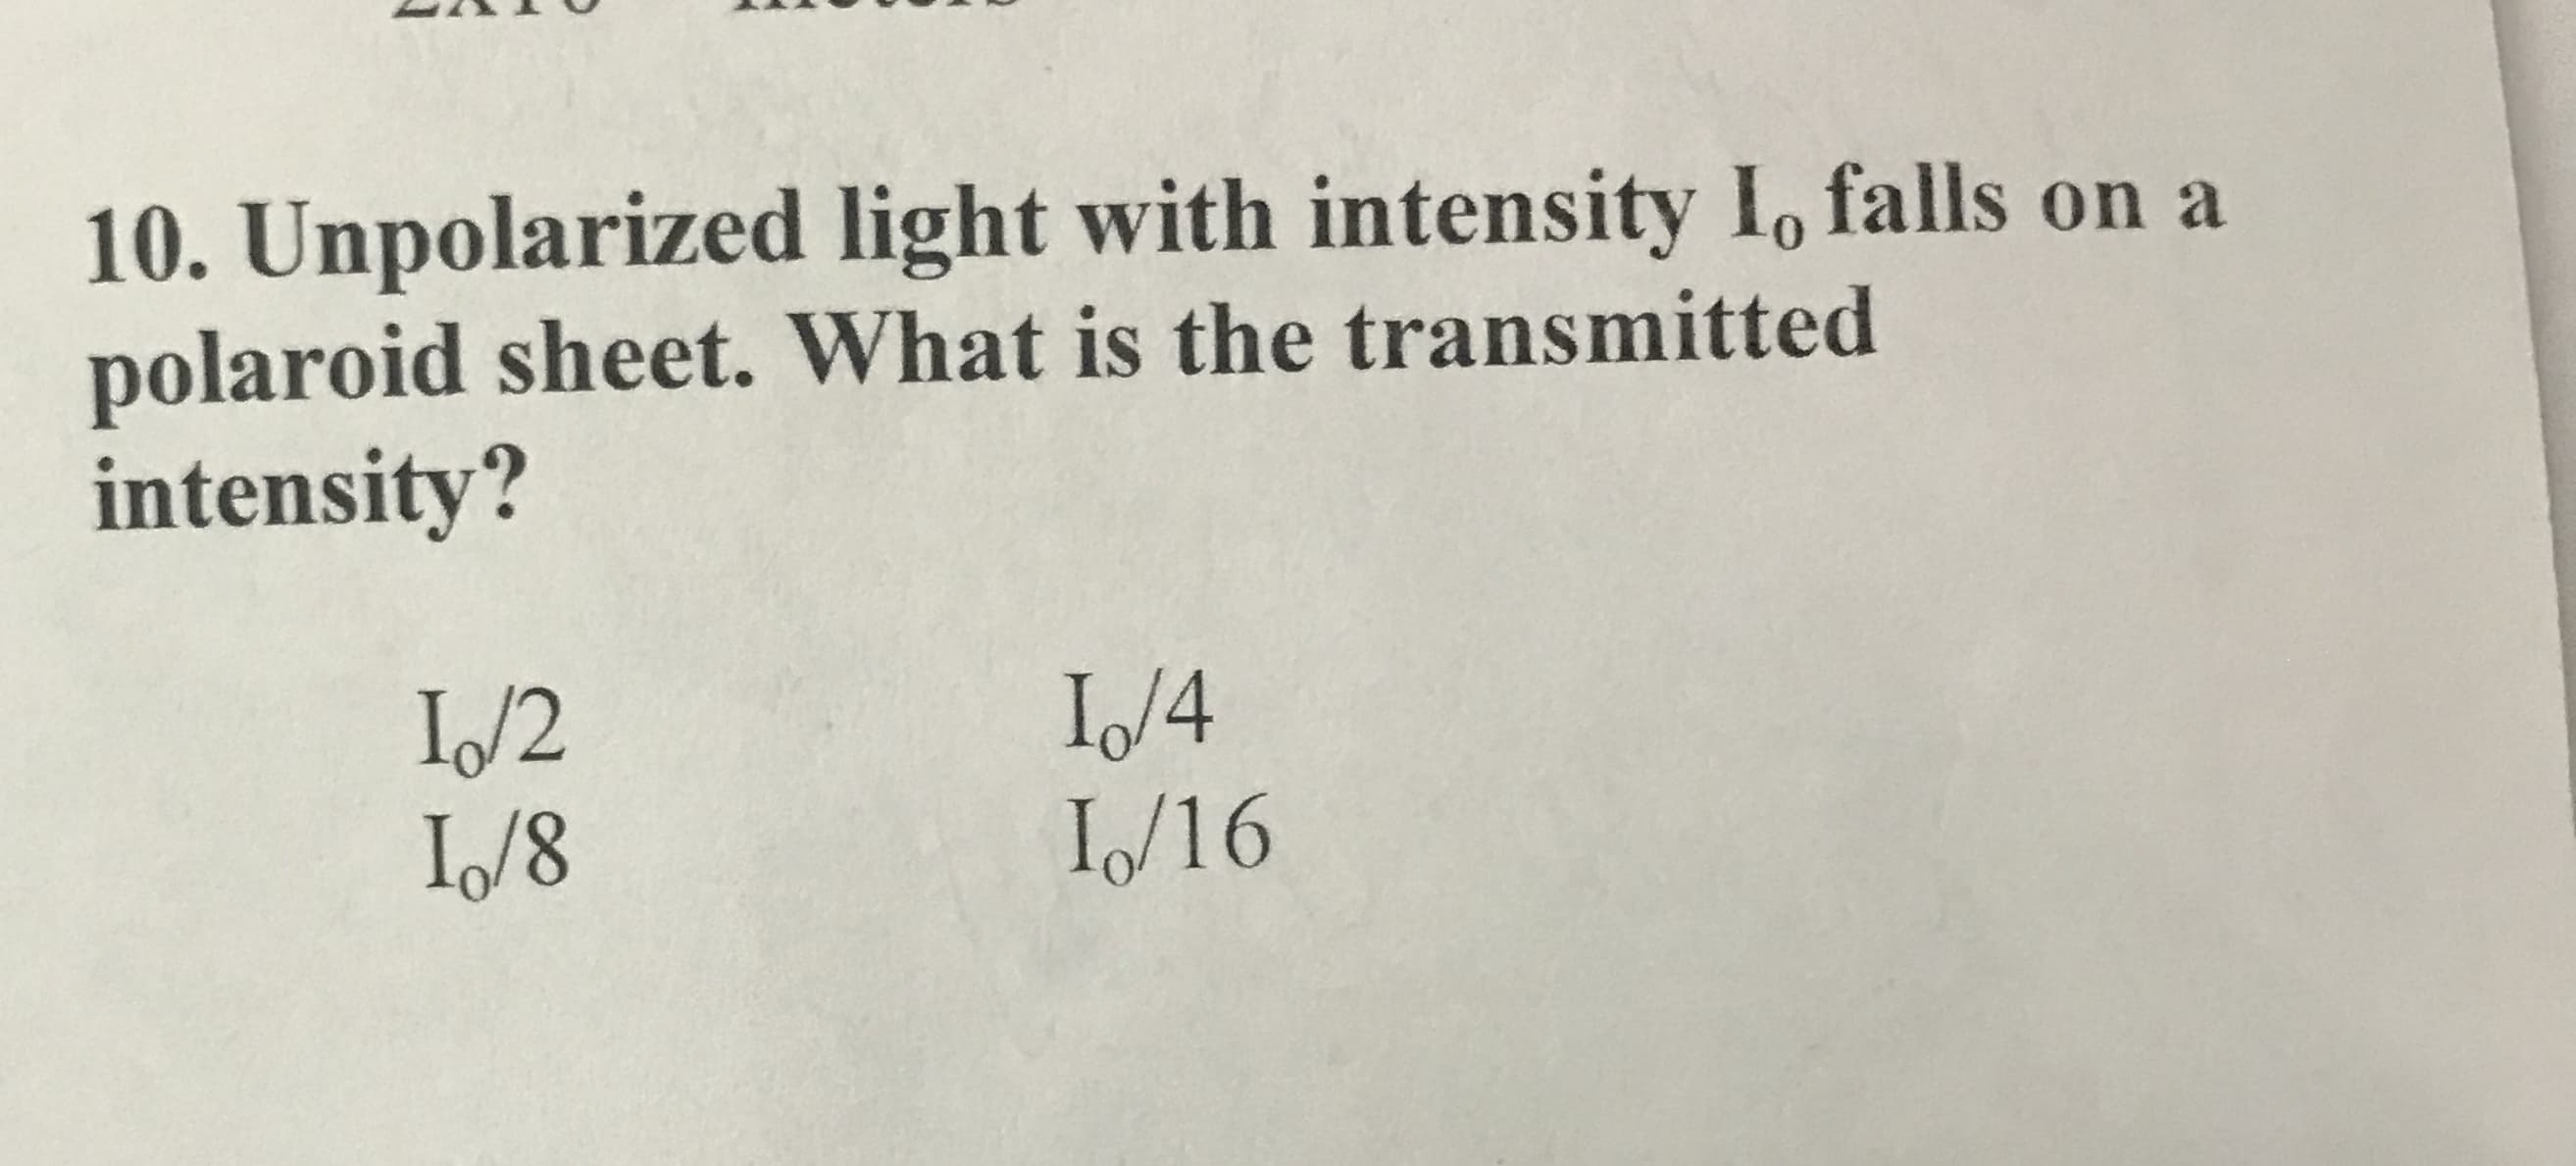 10. Unpolarized light with intensity I, falls on a
polaroid sheet. What is the transmitted
intensity?
I/2
I/8
I/4
I/16
